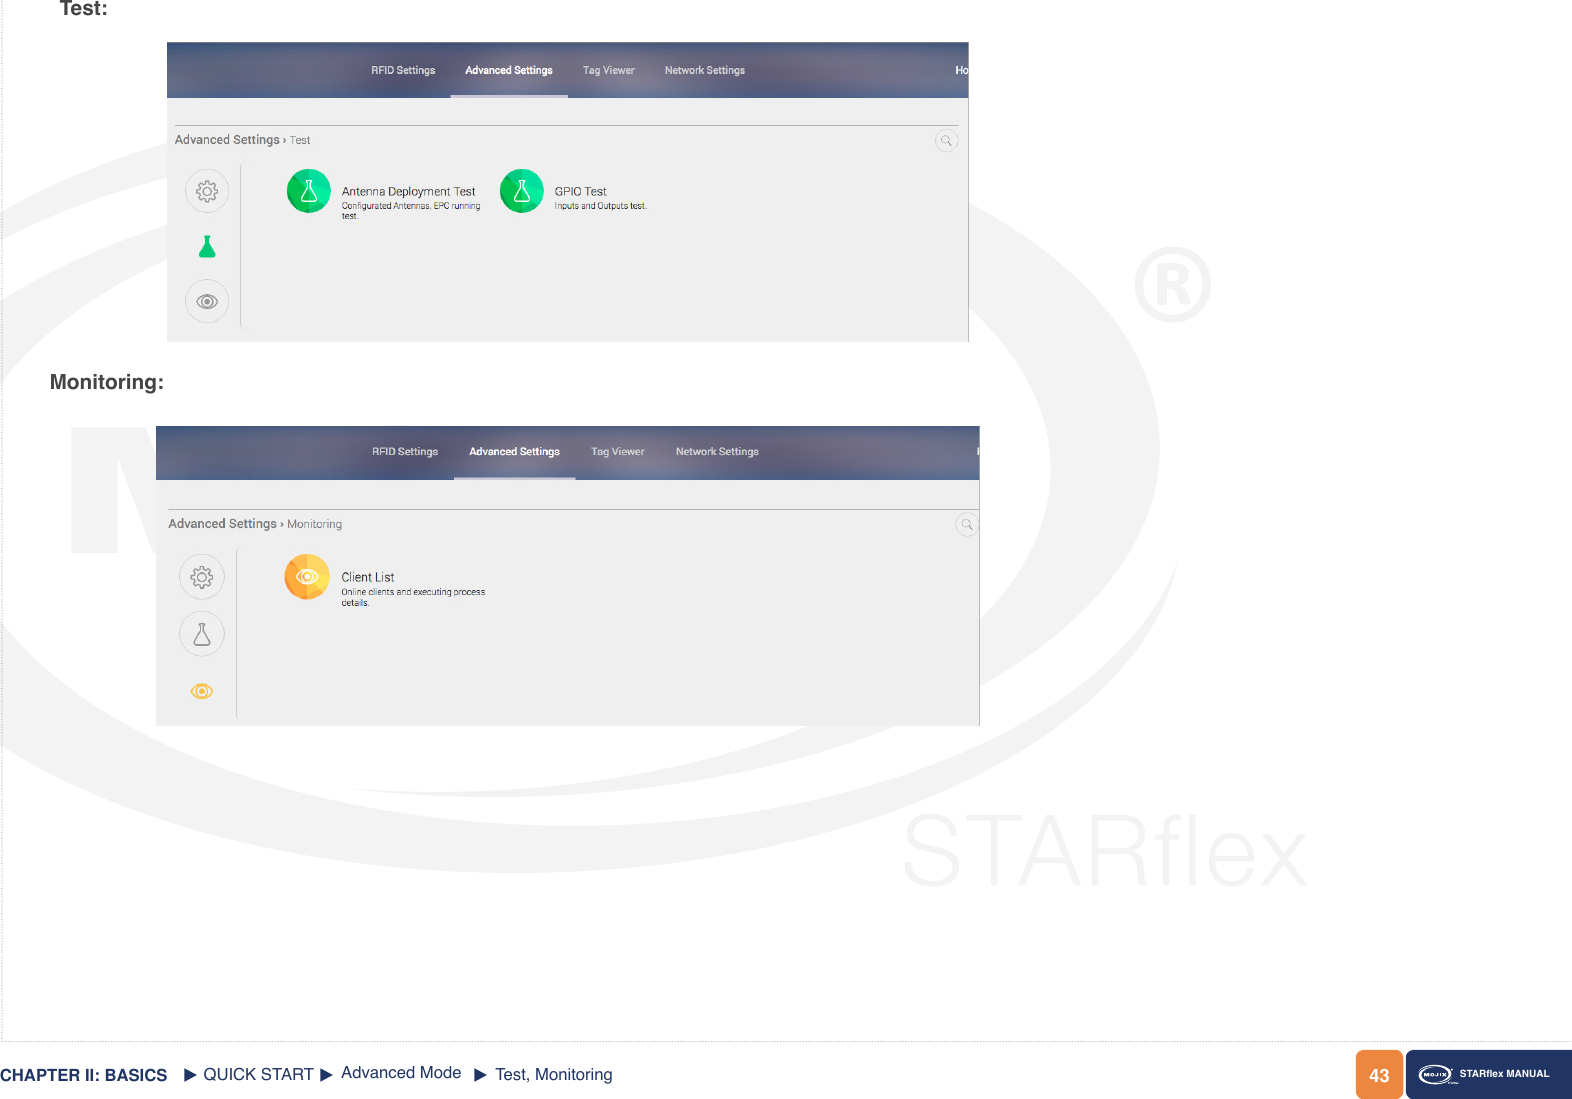 43 STARex MANUALCHAPTER II: BASICSTest:Monitoring:QUICK START Advanced Mode Test, Monitoring